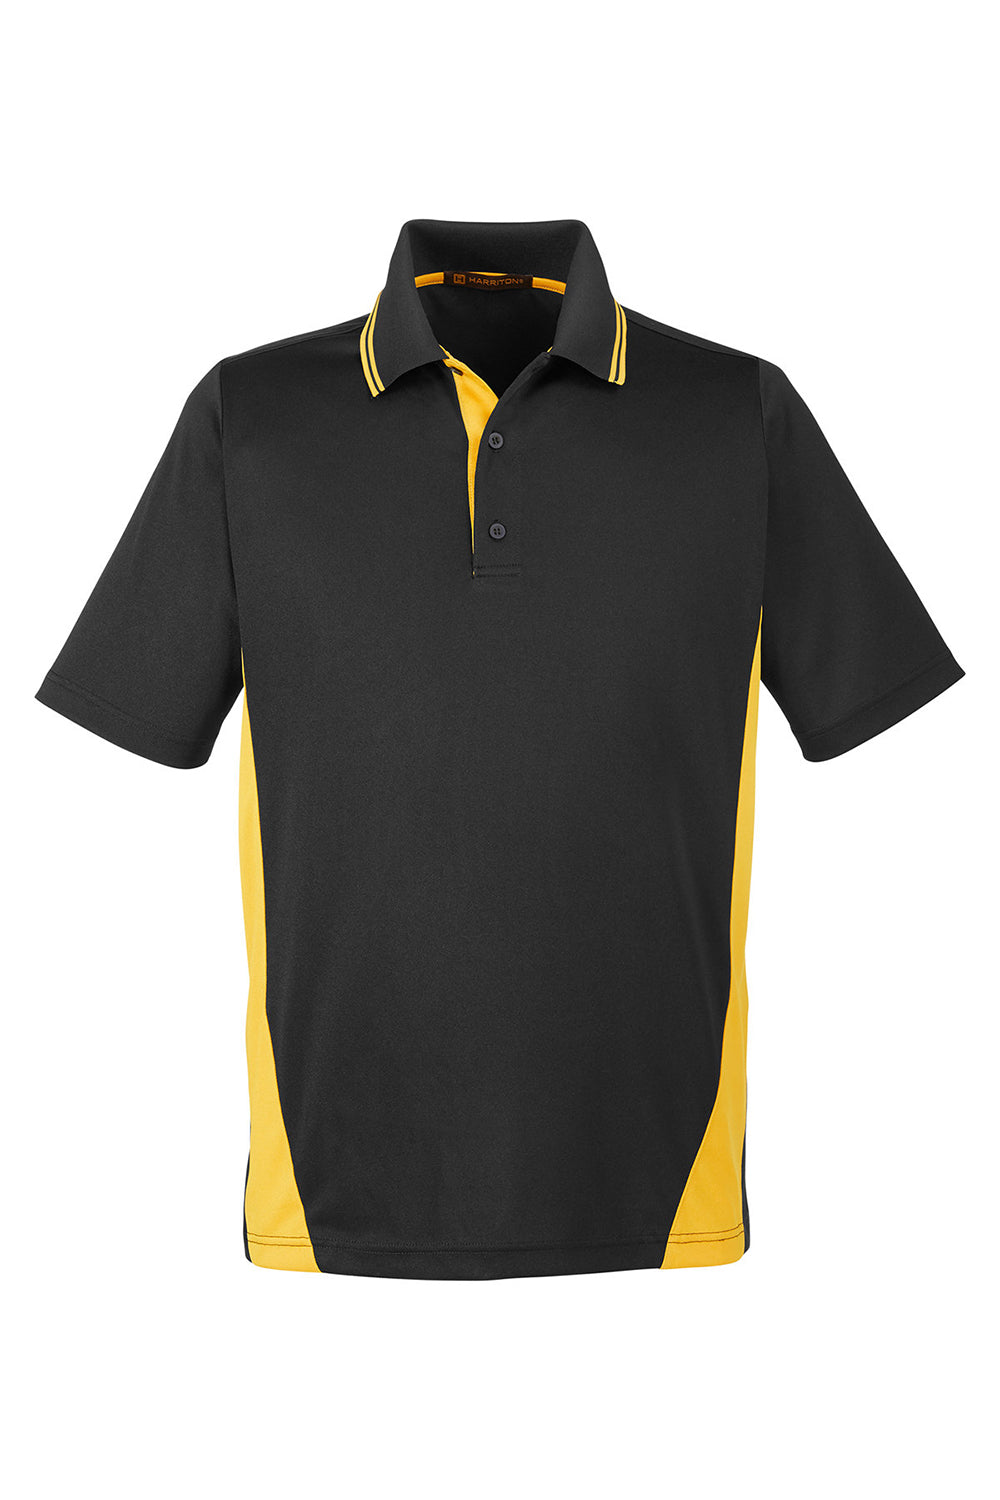 Harriton M386/M386T Mens Flash Performance Moisture Wicking Colorblock Short Sleeve Polo Shirt Black/Sunray Yellow Flat Front